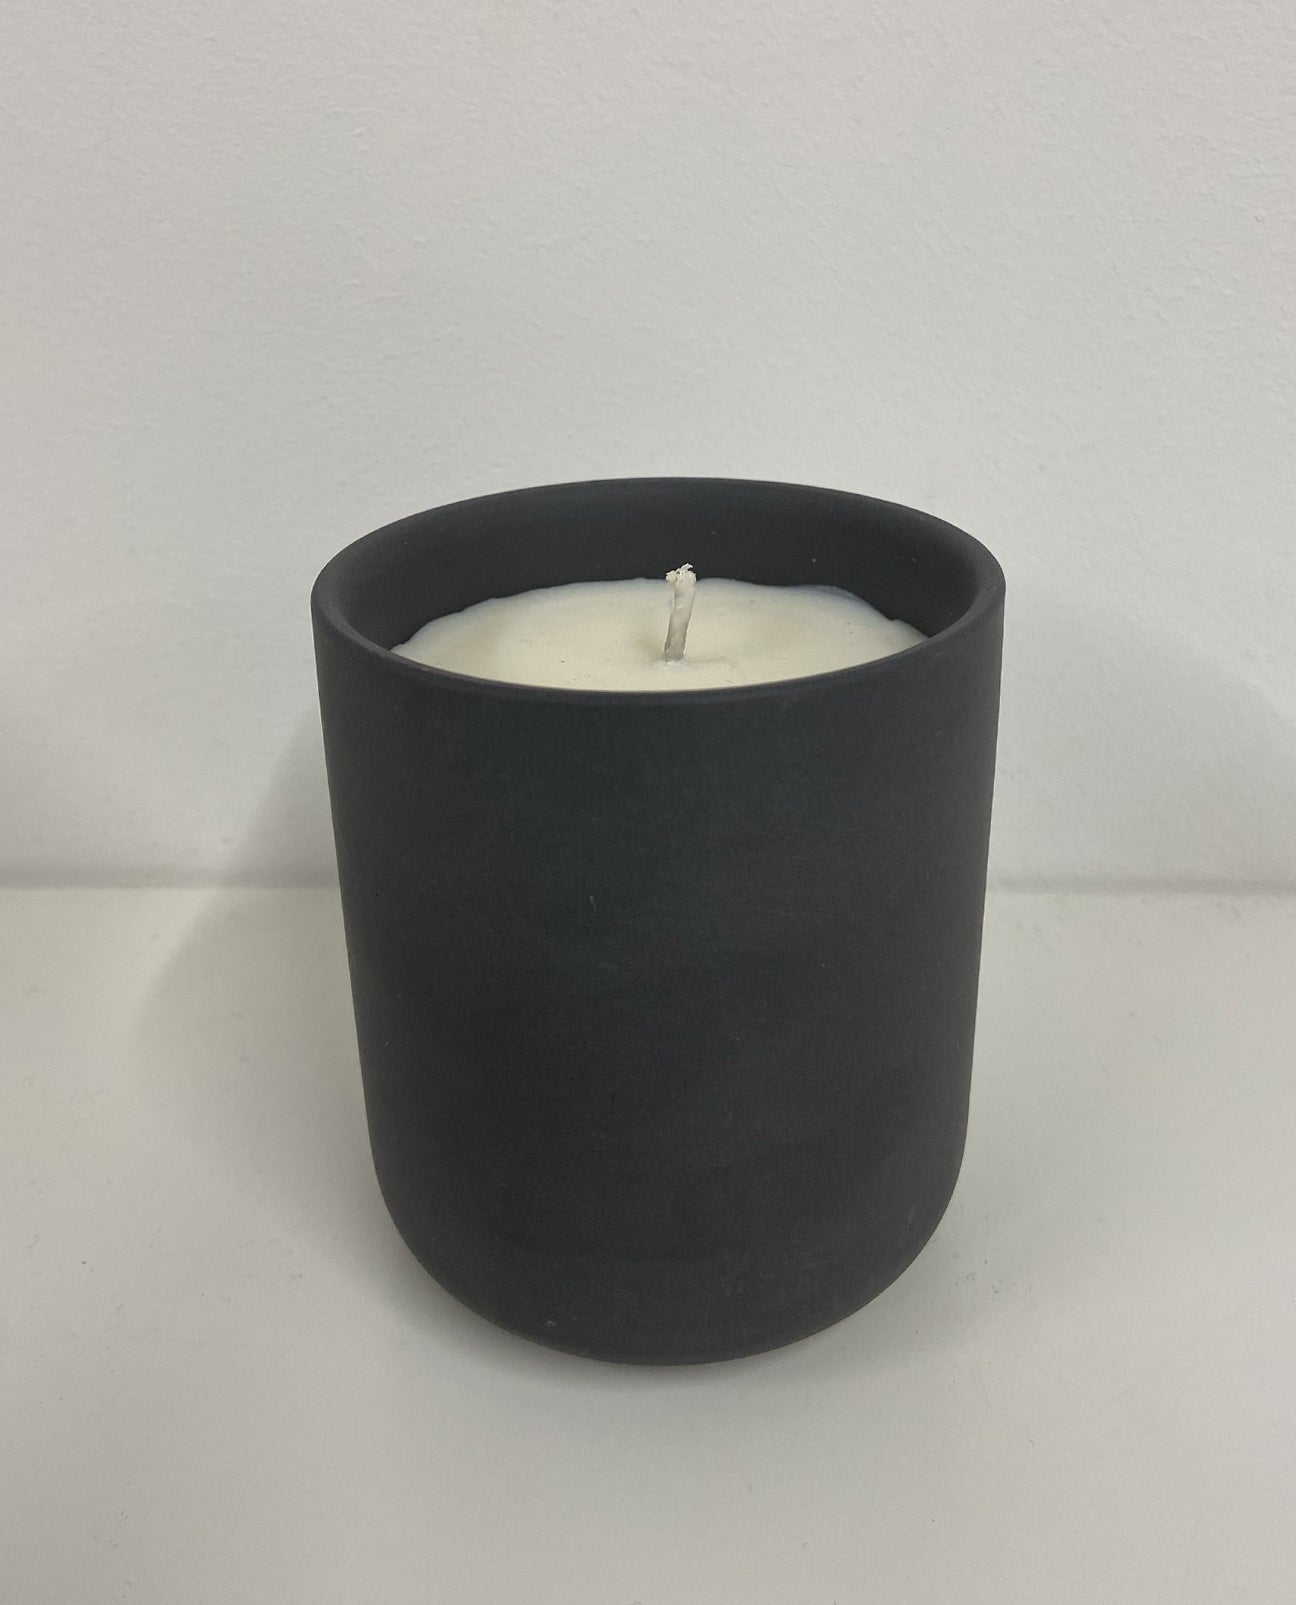 Jasmine, Rosemary and Cedar 280g Candle in Graphite Black Ceramic